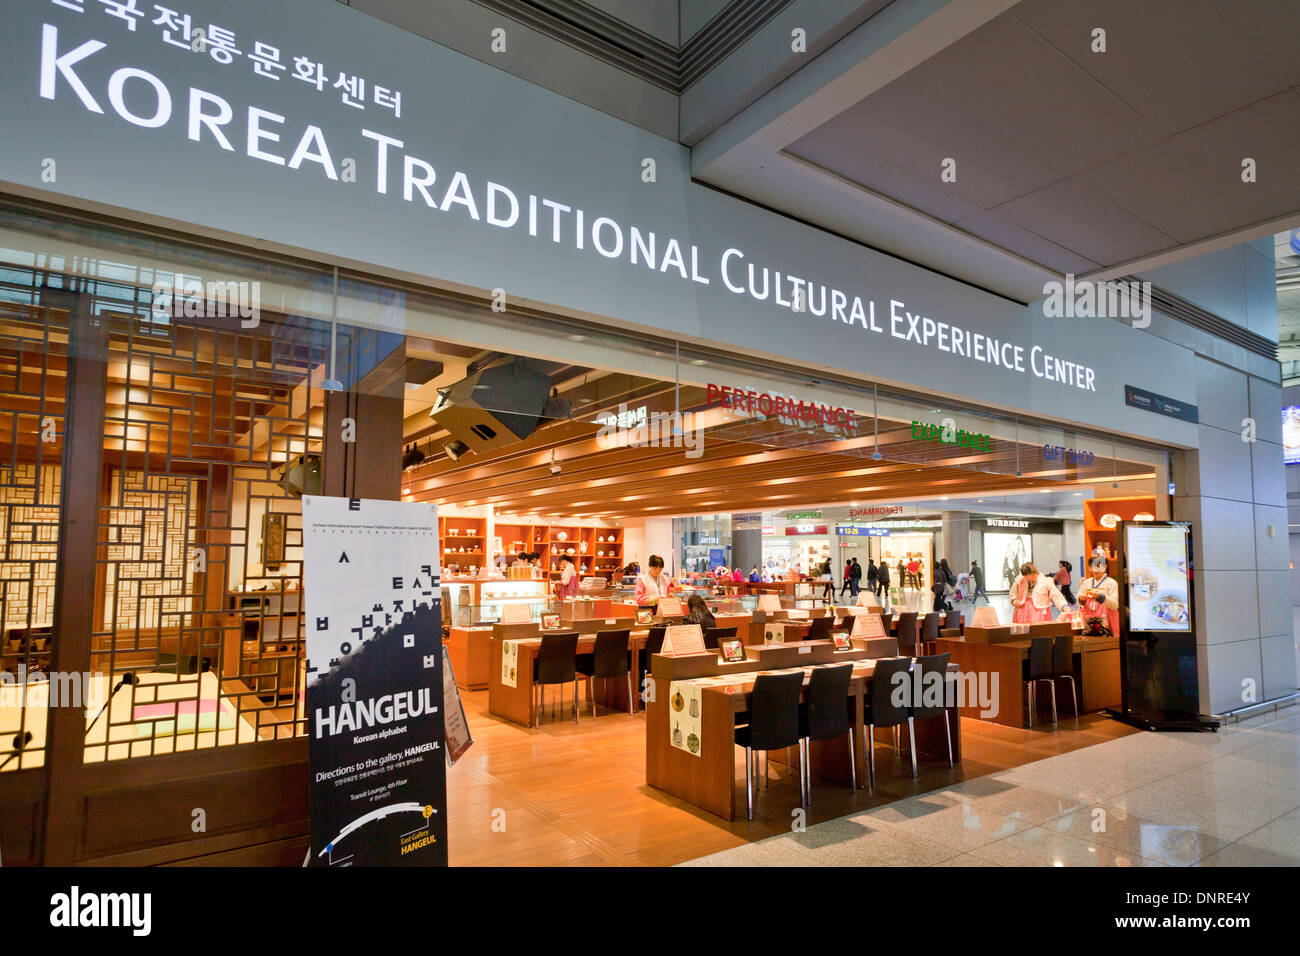 Korea traditionelle Erfahrung Kulturzentrum am Incheon International Airport - Südkorea Stockfoto